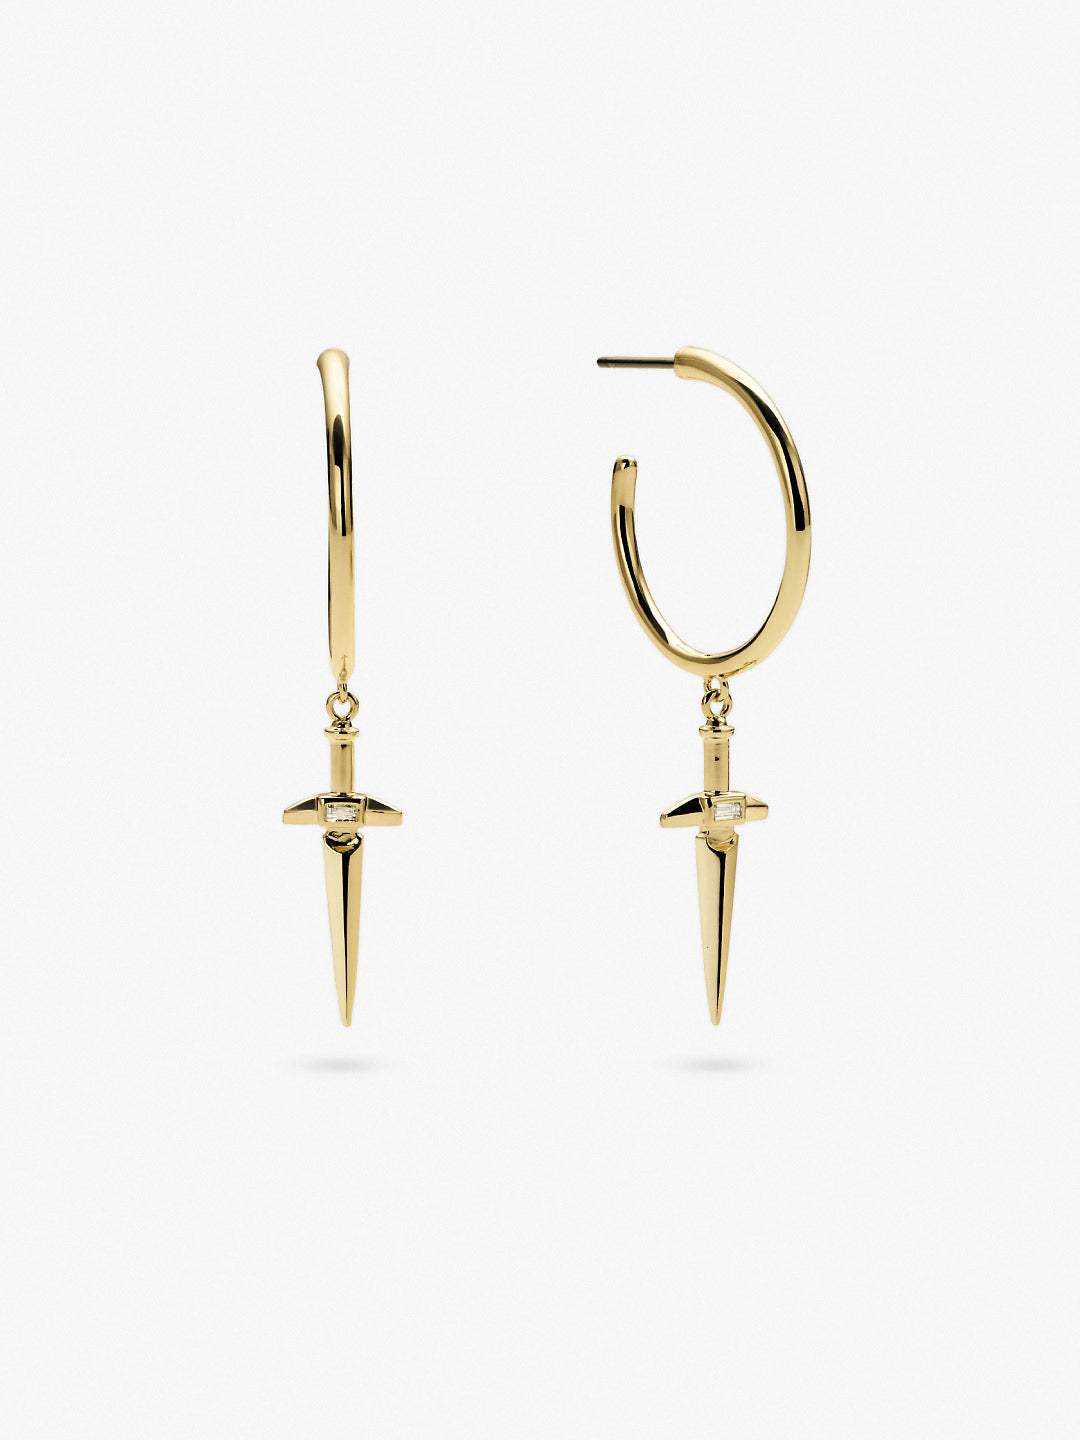 14K Gold Double Hoops Earrings - Duo - Ana Luisa Jewelry - Black Friday Earrings